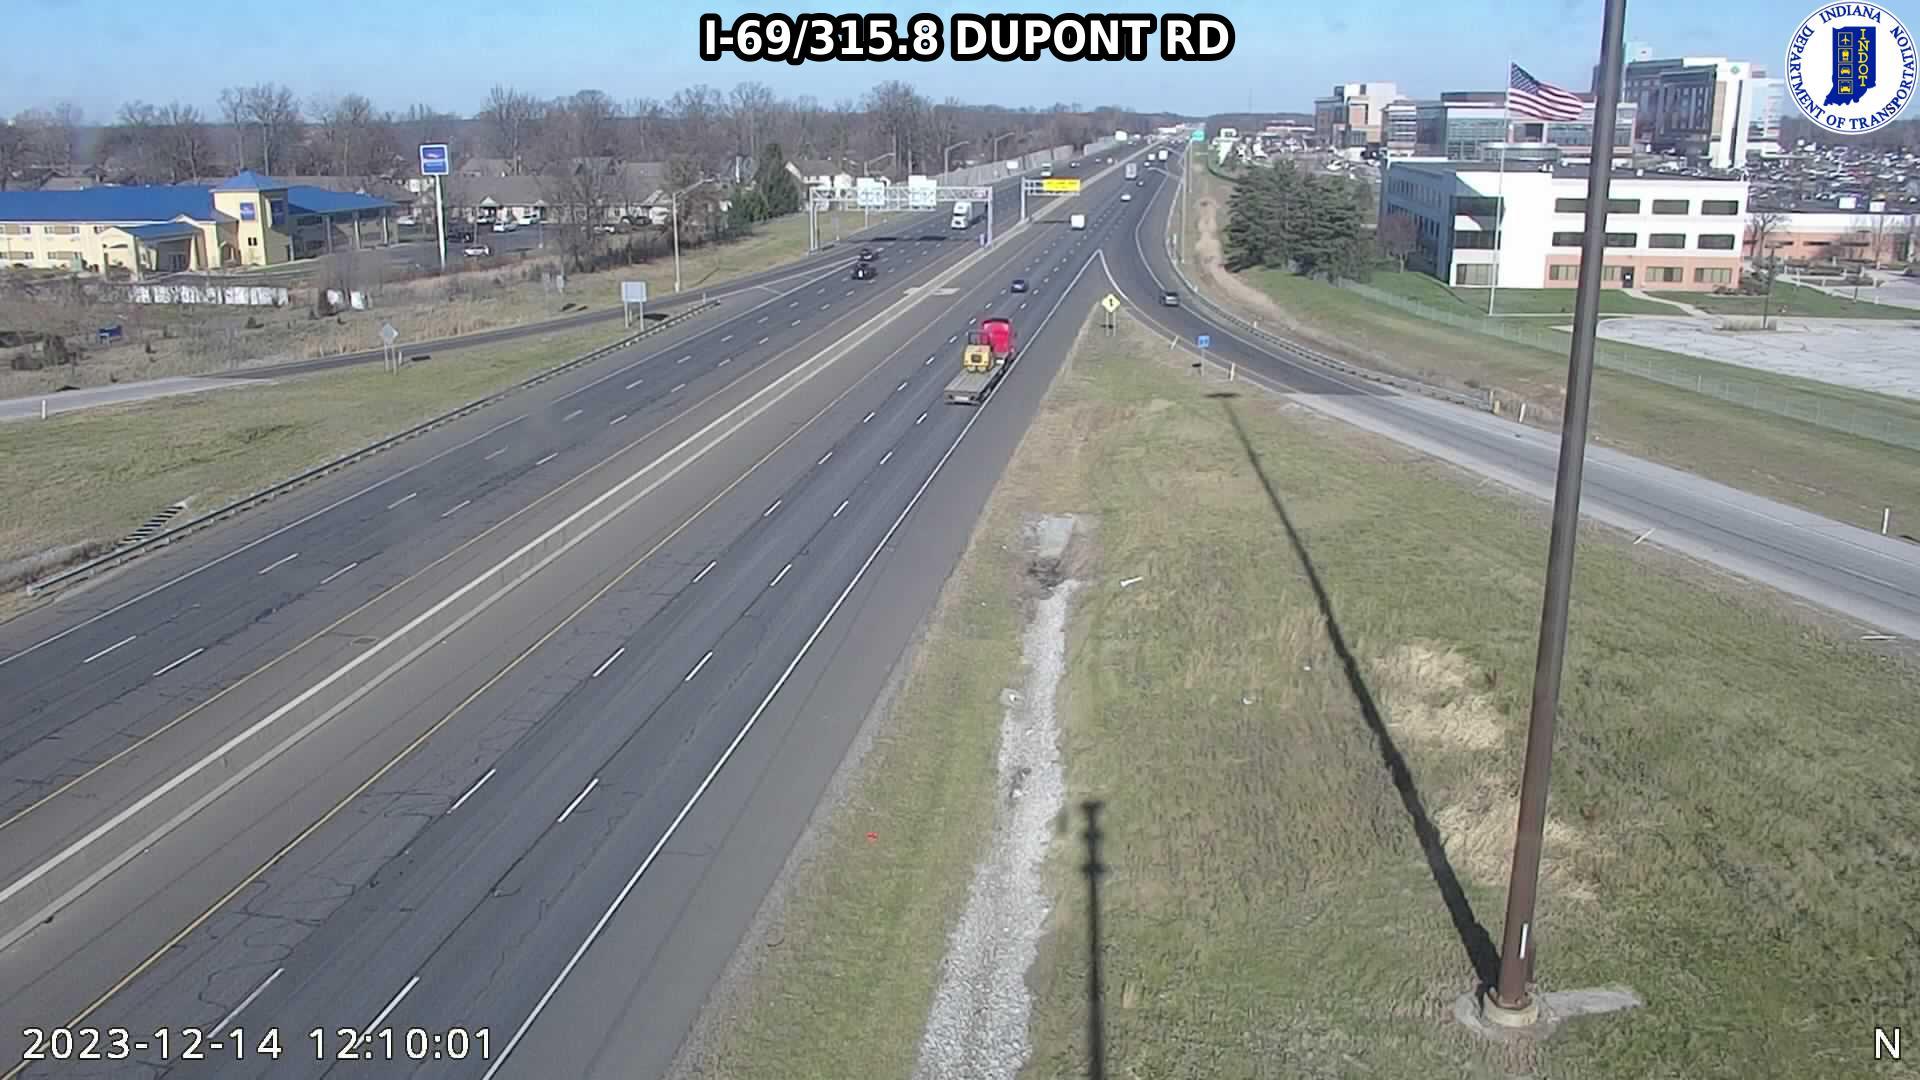 Fort Wayne: I-69: I-69/315.8 DUPONT RD Traffic Camera